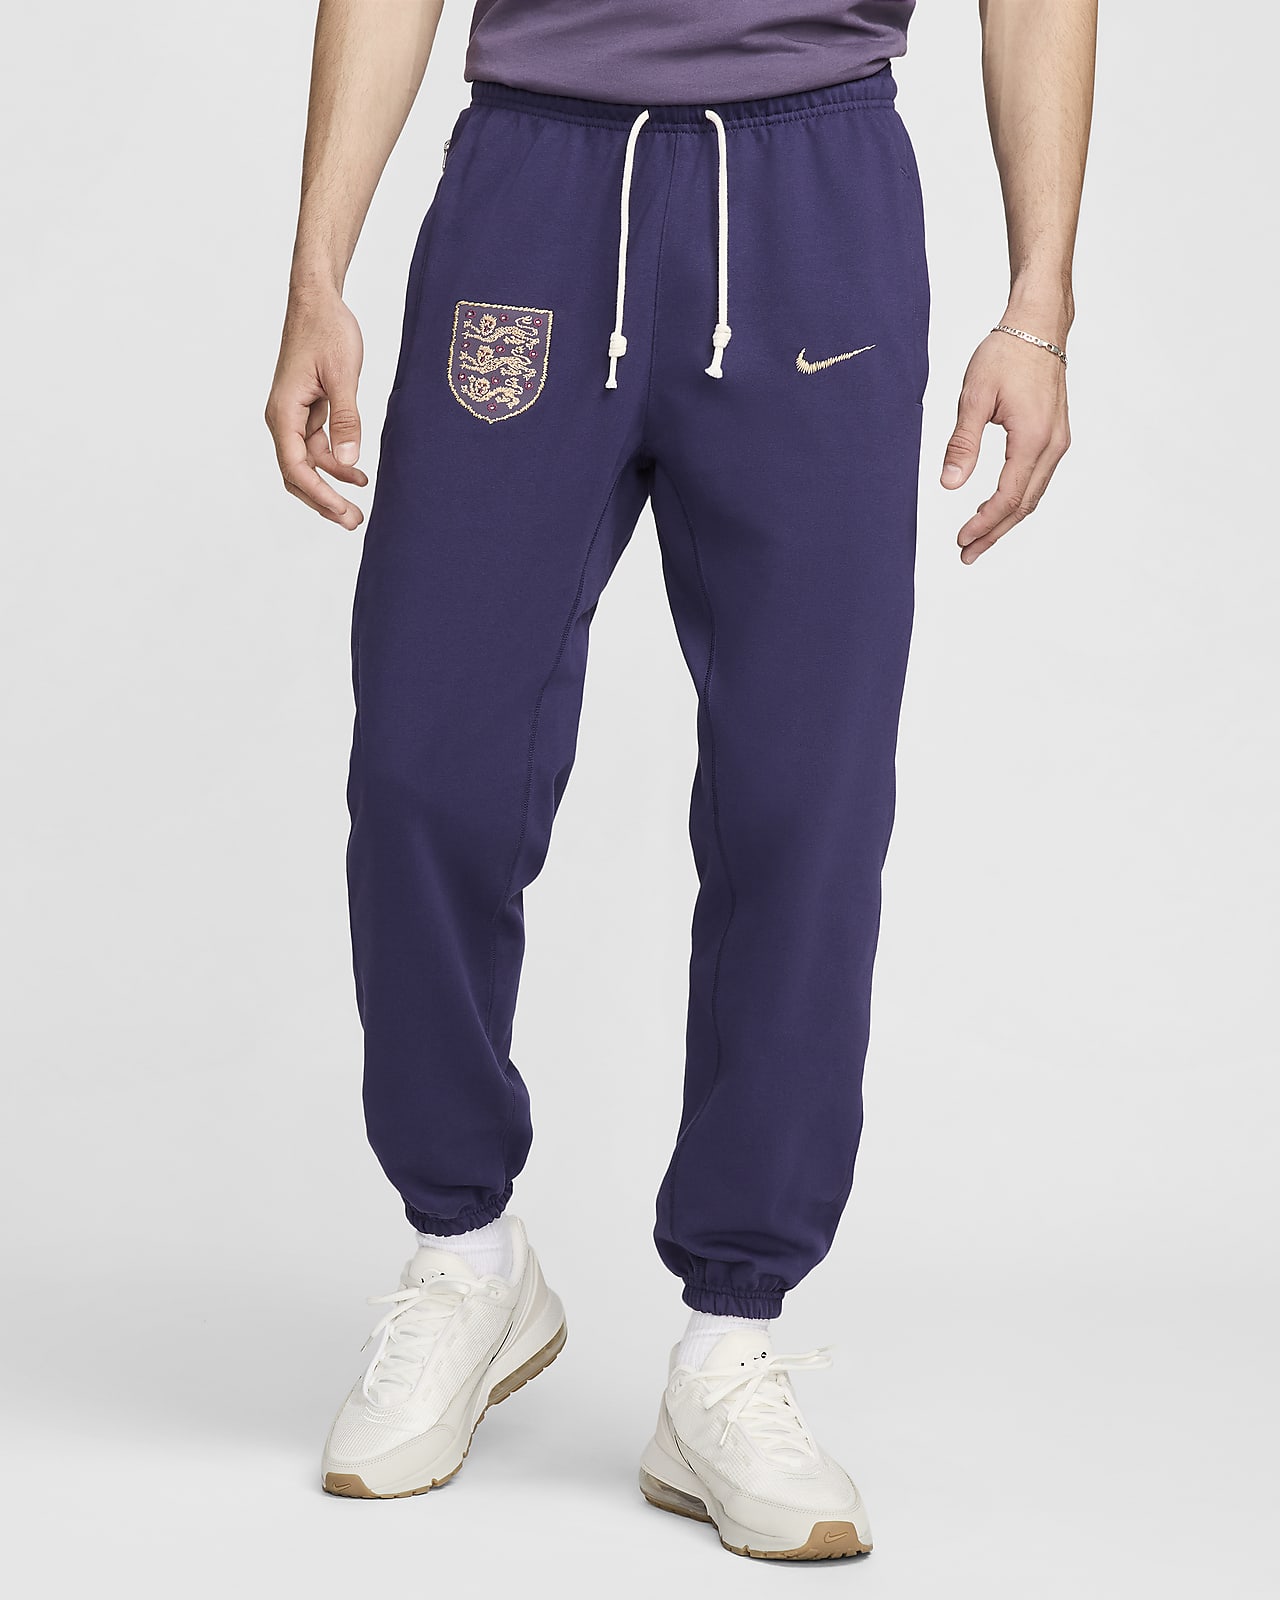 England Standard Issue Men's Nike Football Pants. Nike LU